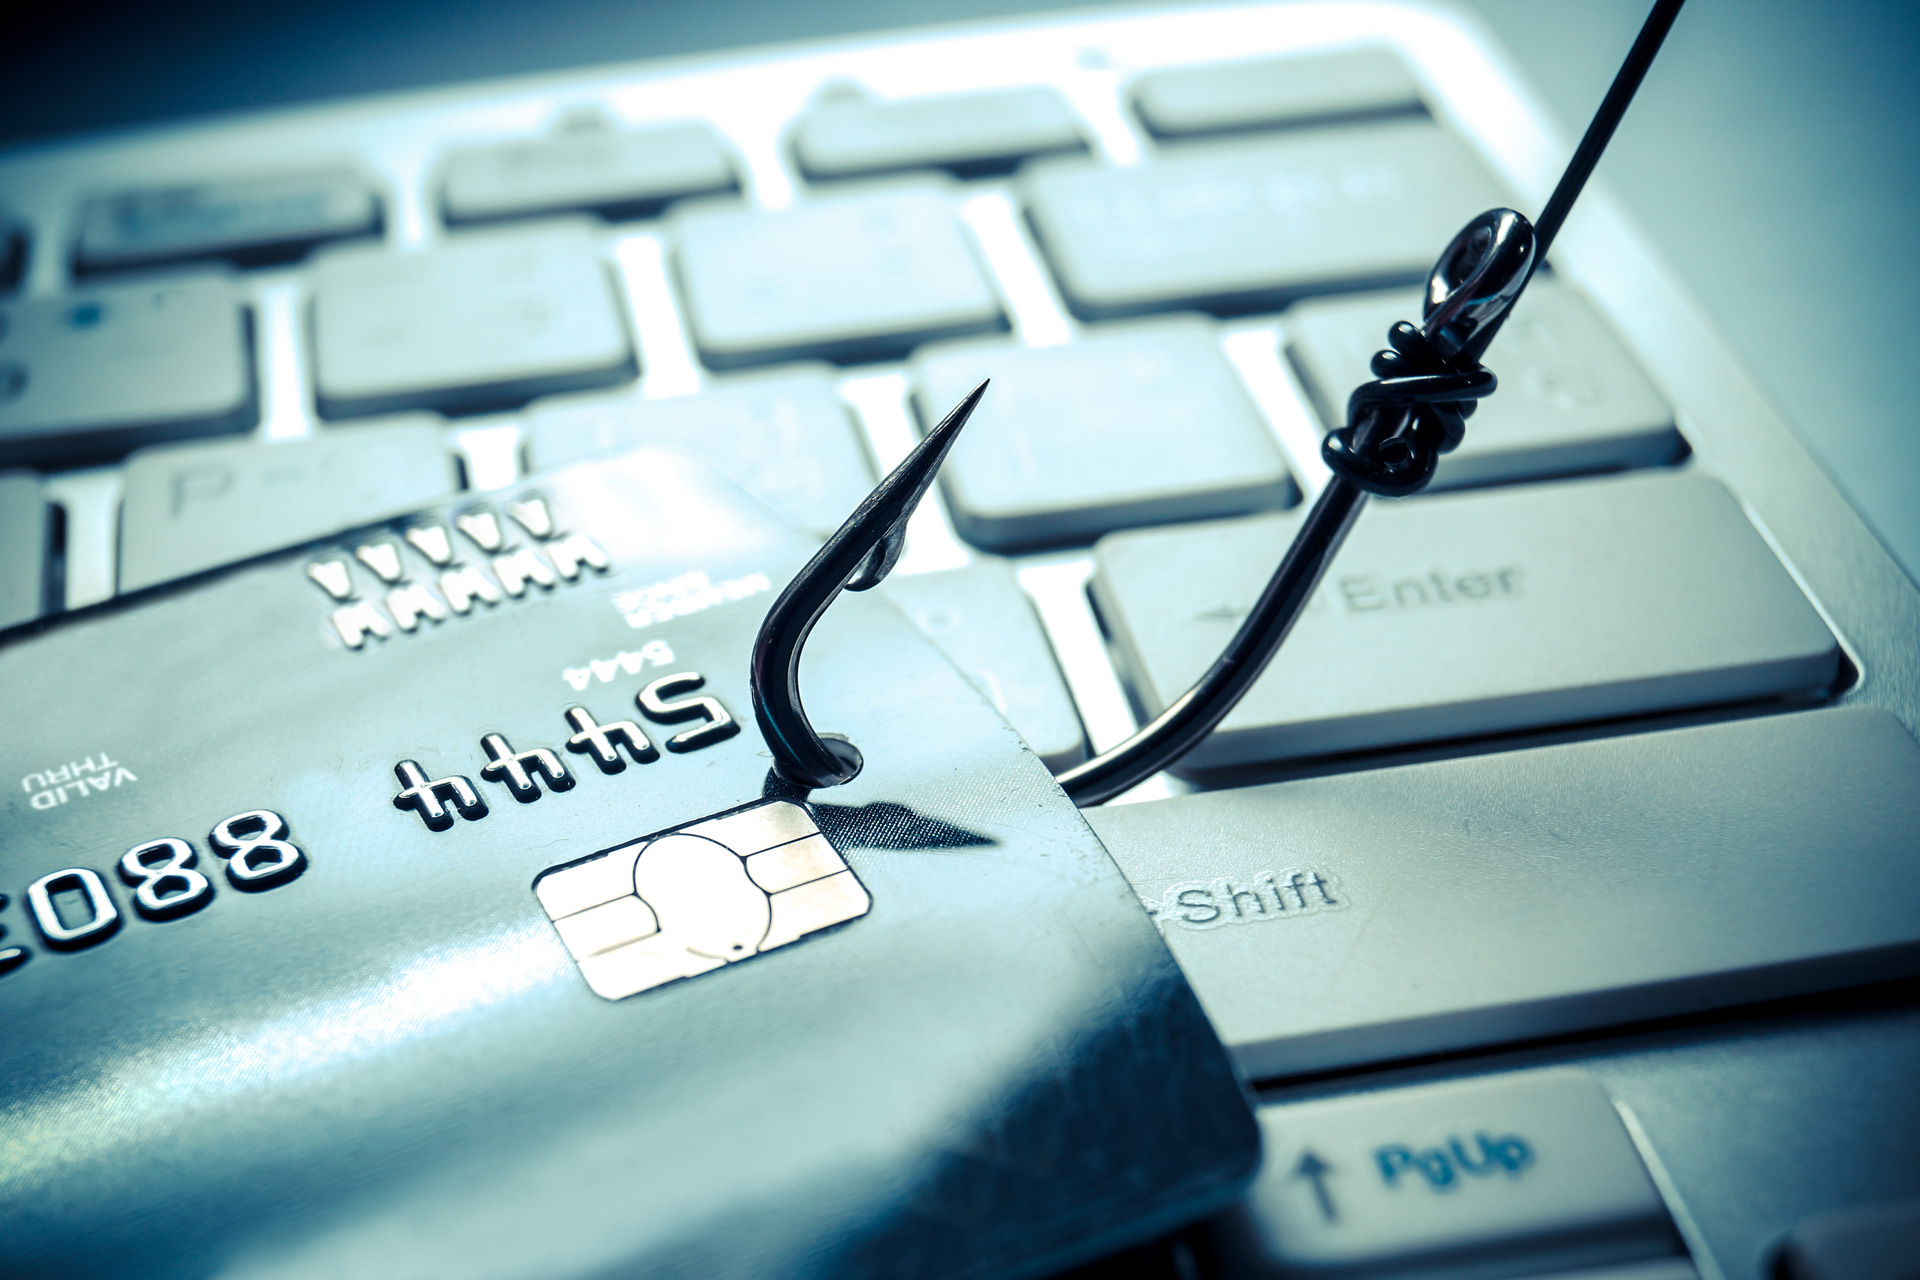 Massive phishing campaign targets Zimbra users